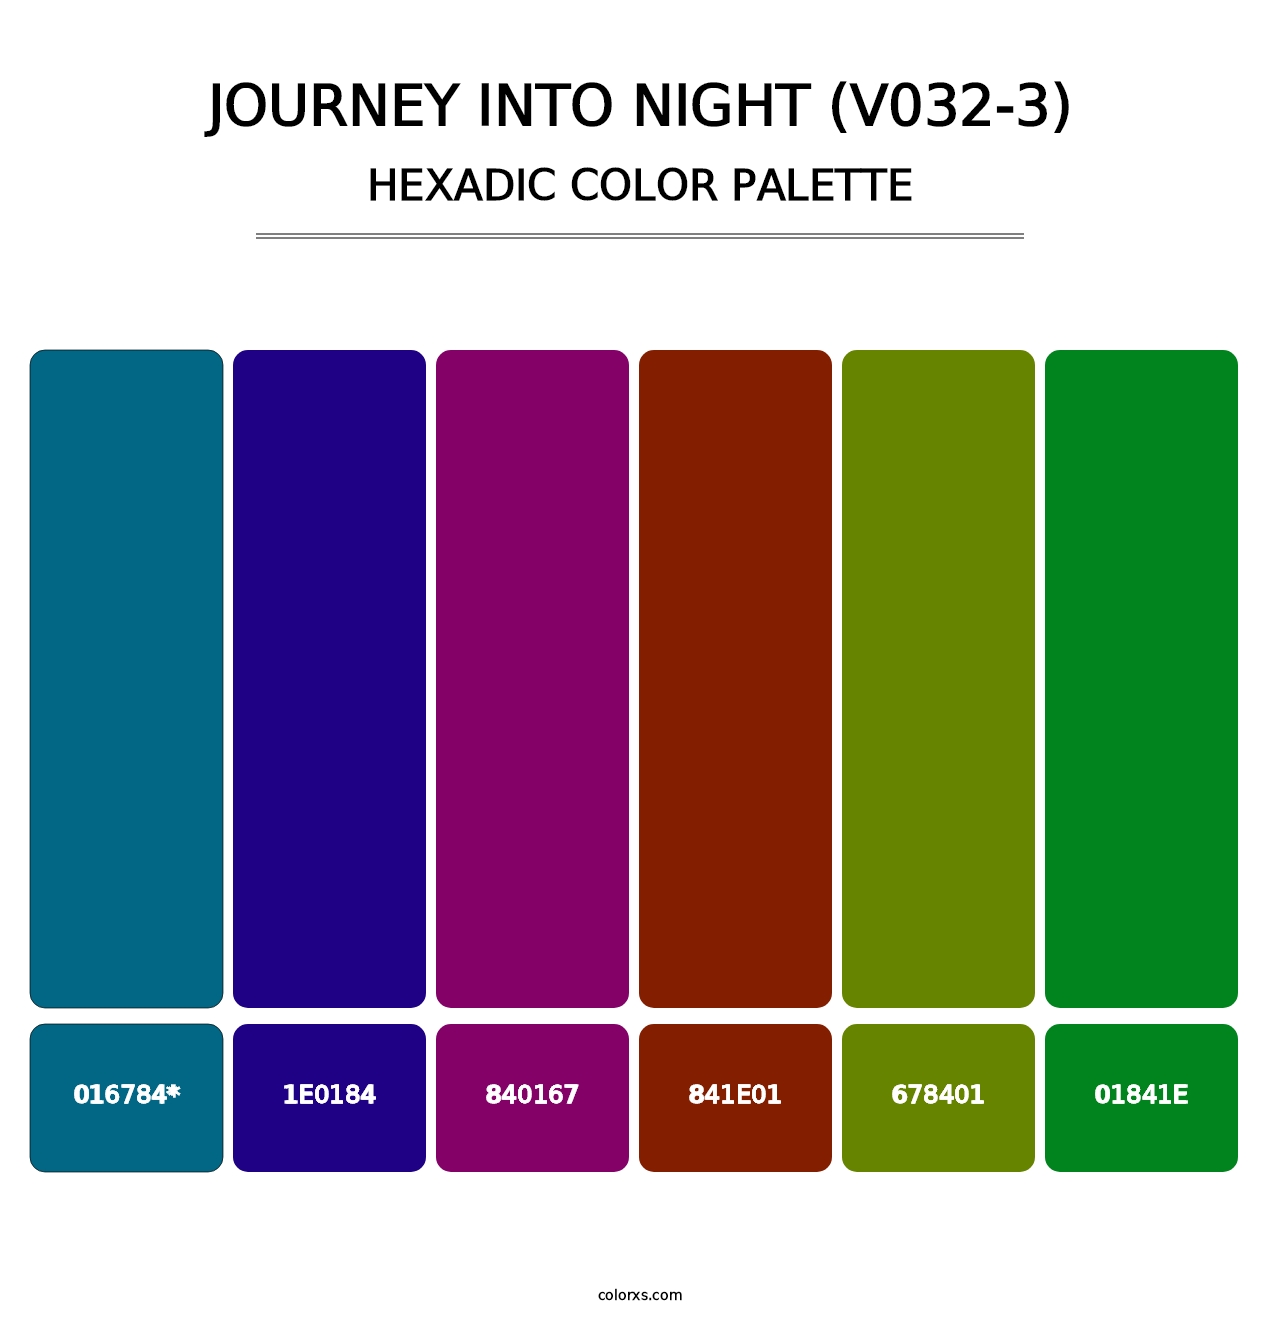 Journey Into Night (V032-3) - Hexadic Color Palette